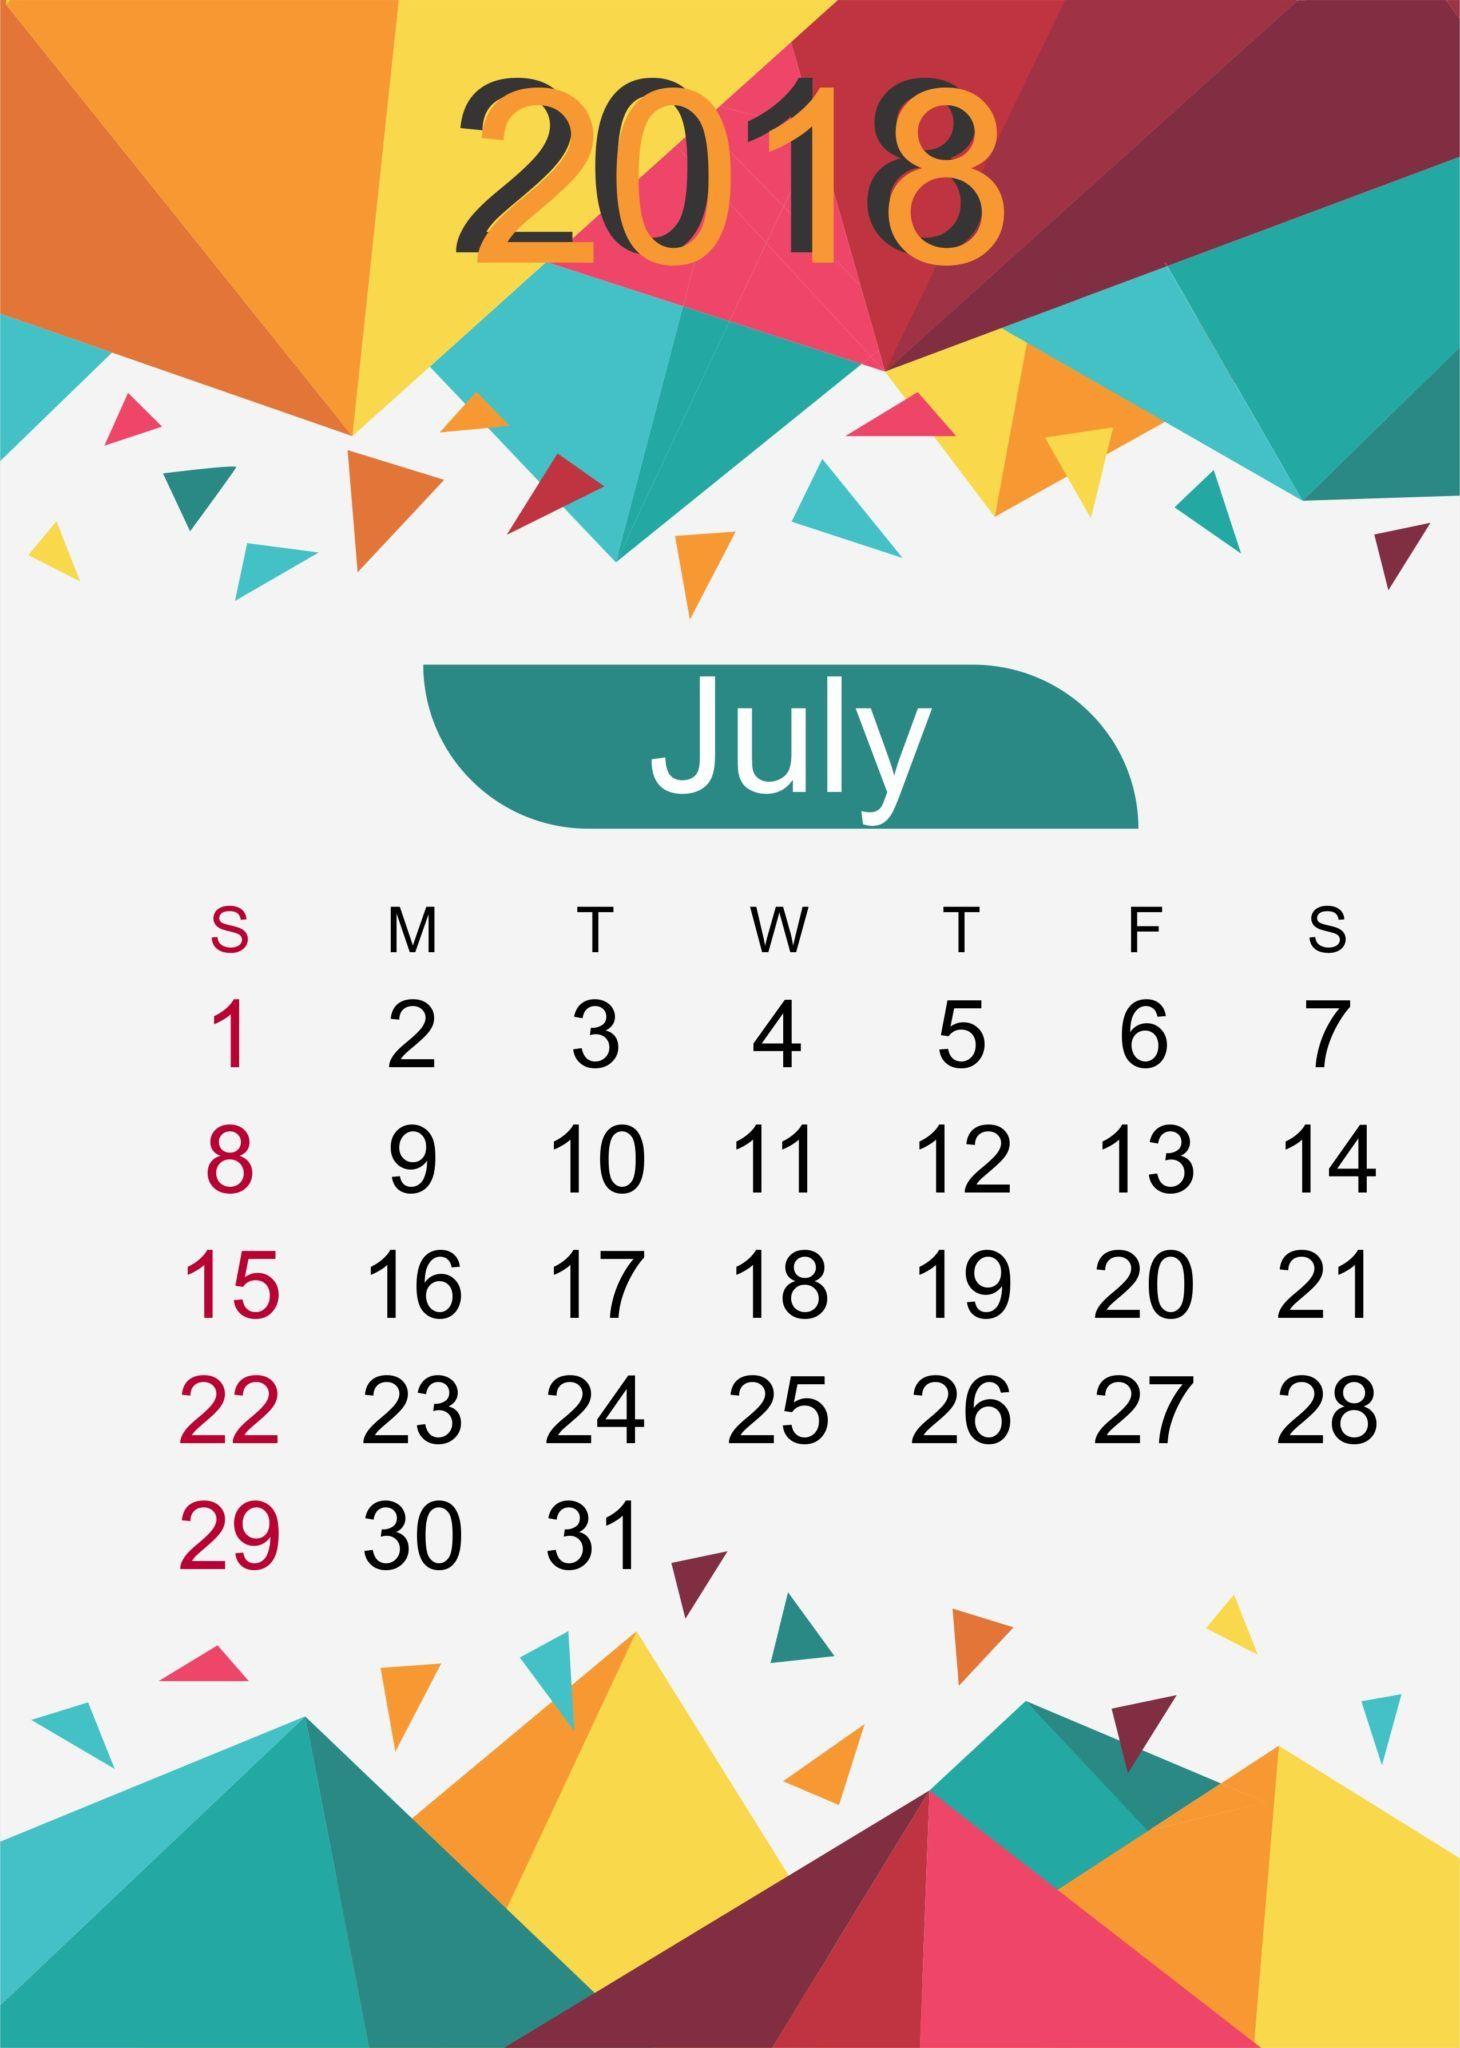 Best July Month 2018 Calendar Designs